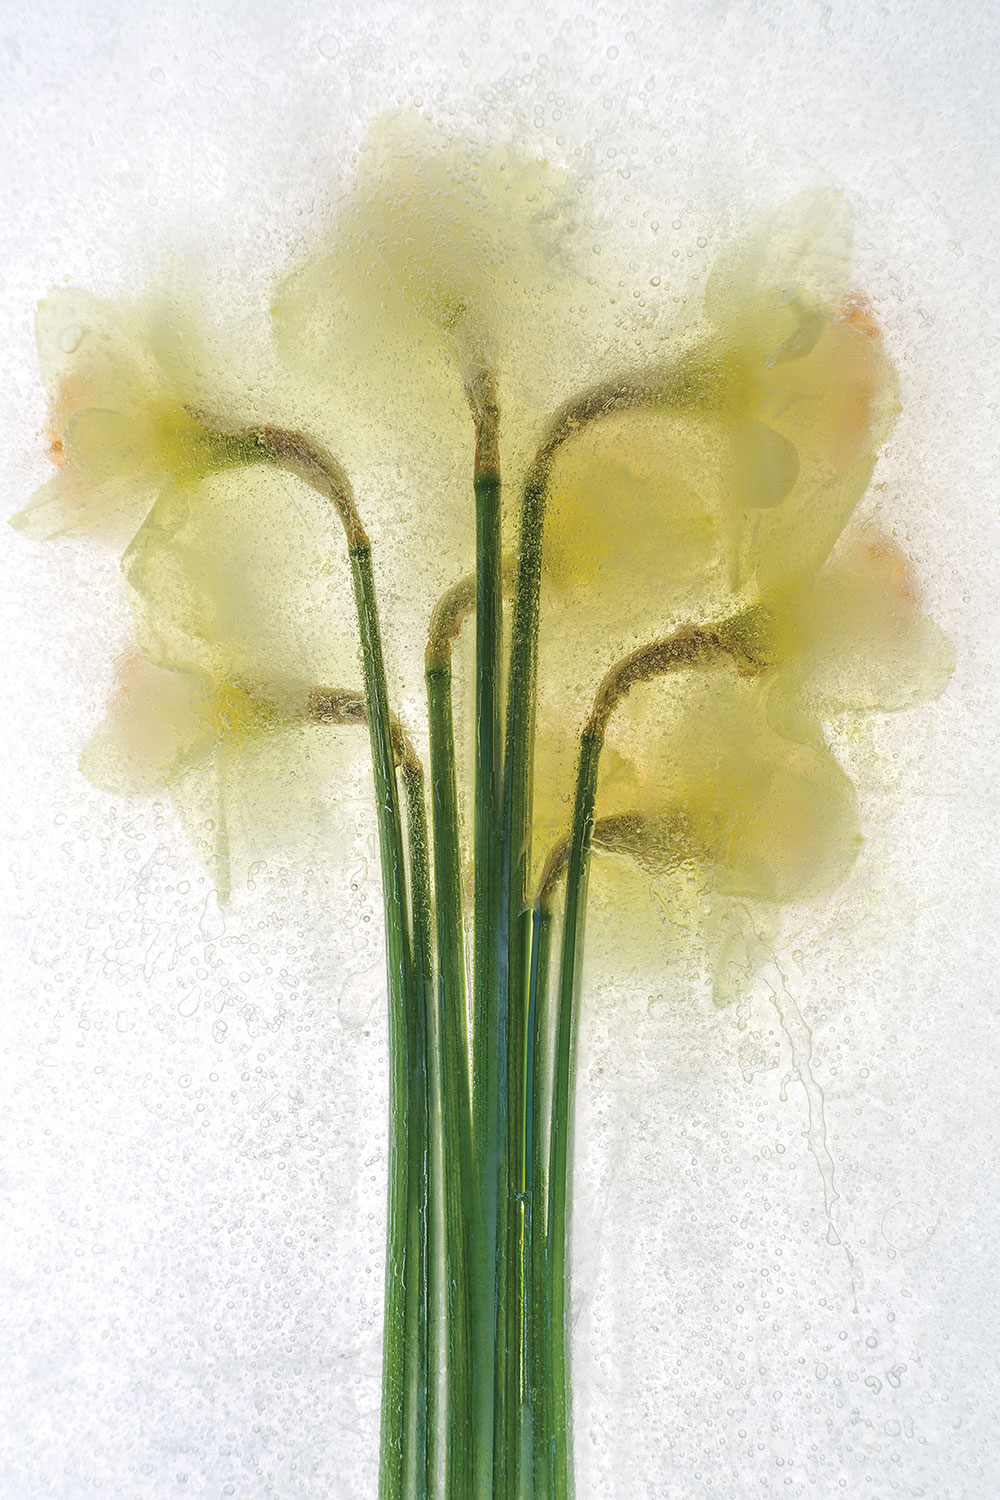 "Daffodil" by Sam Stapleton